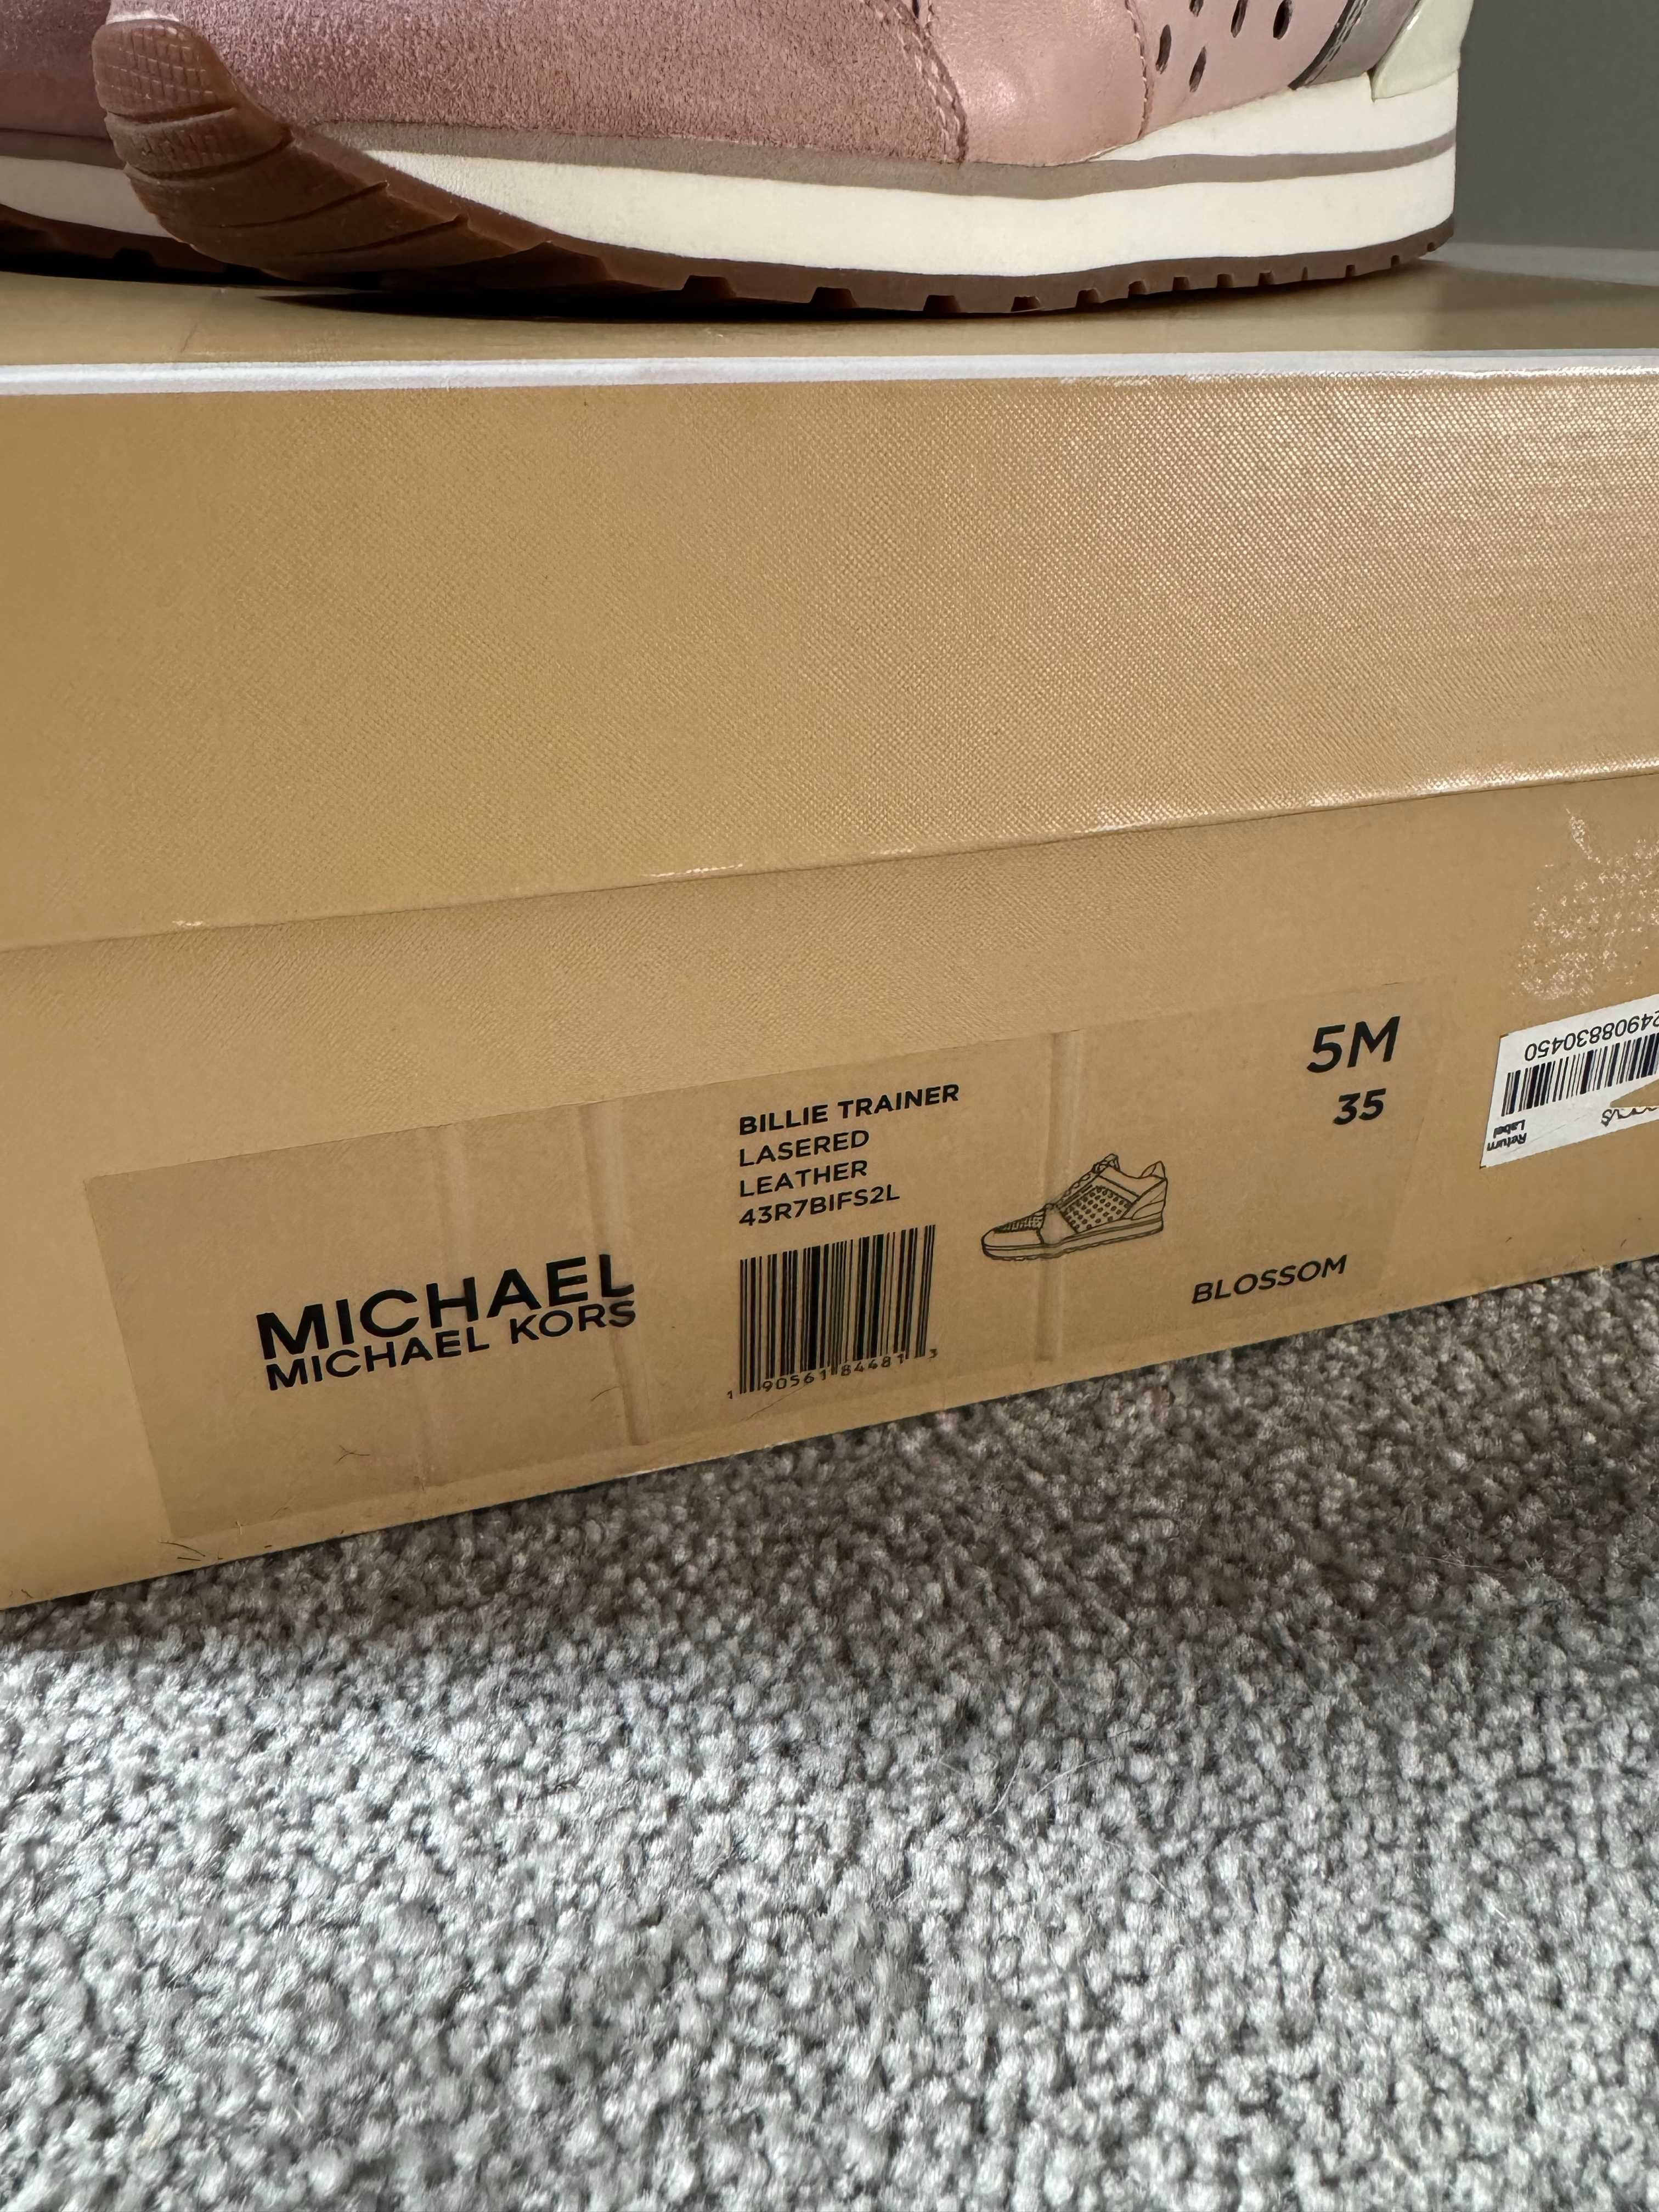 Sneakersy / Półbuty Michael Kors BILLIE TRAINER rozmiar 35